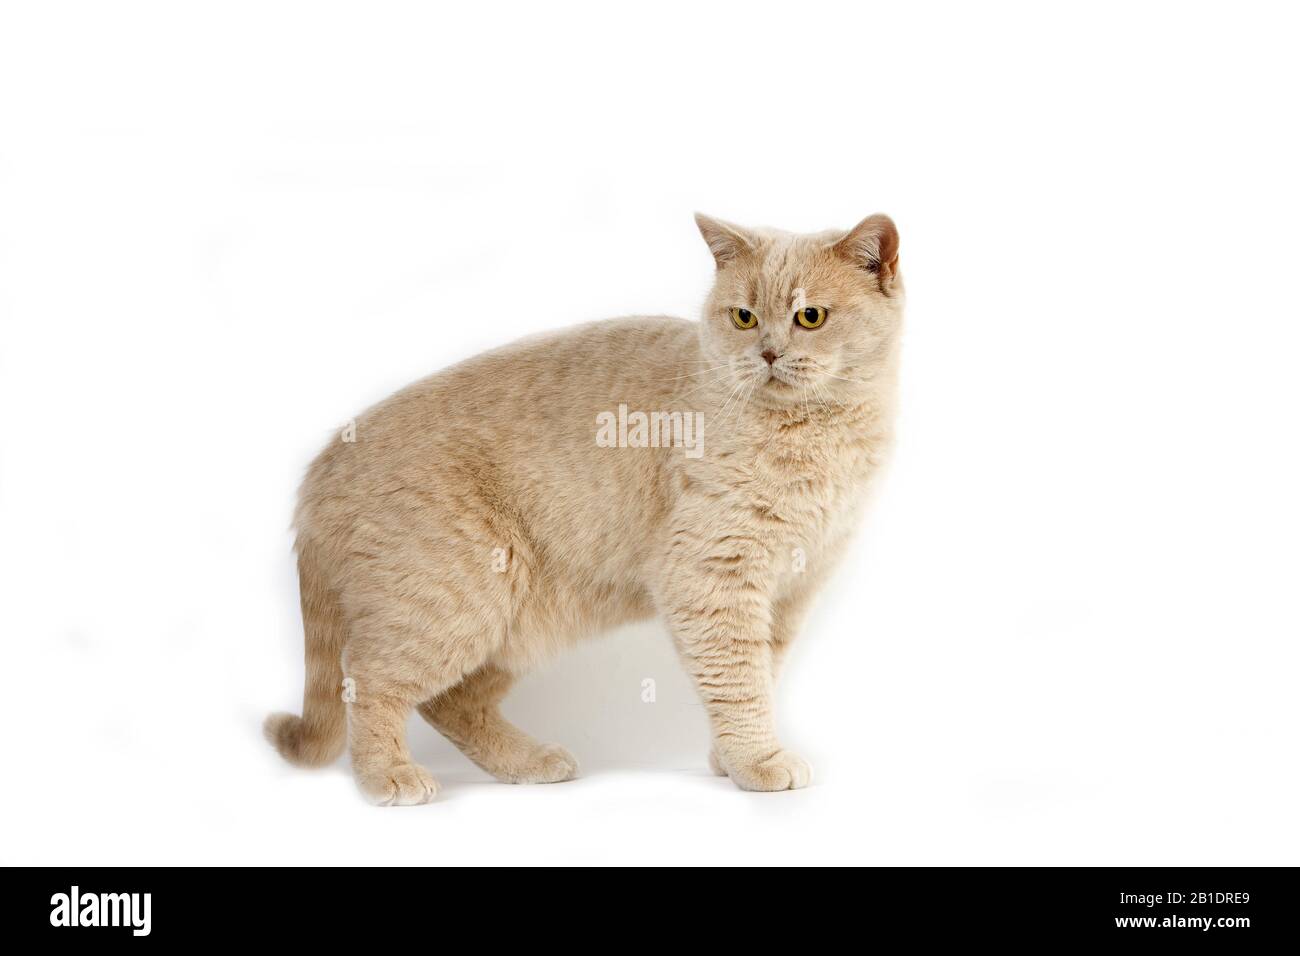 Crema British Shorthair gato doméstico, hembra contra fondo blanco. Foto de stock